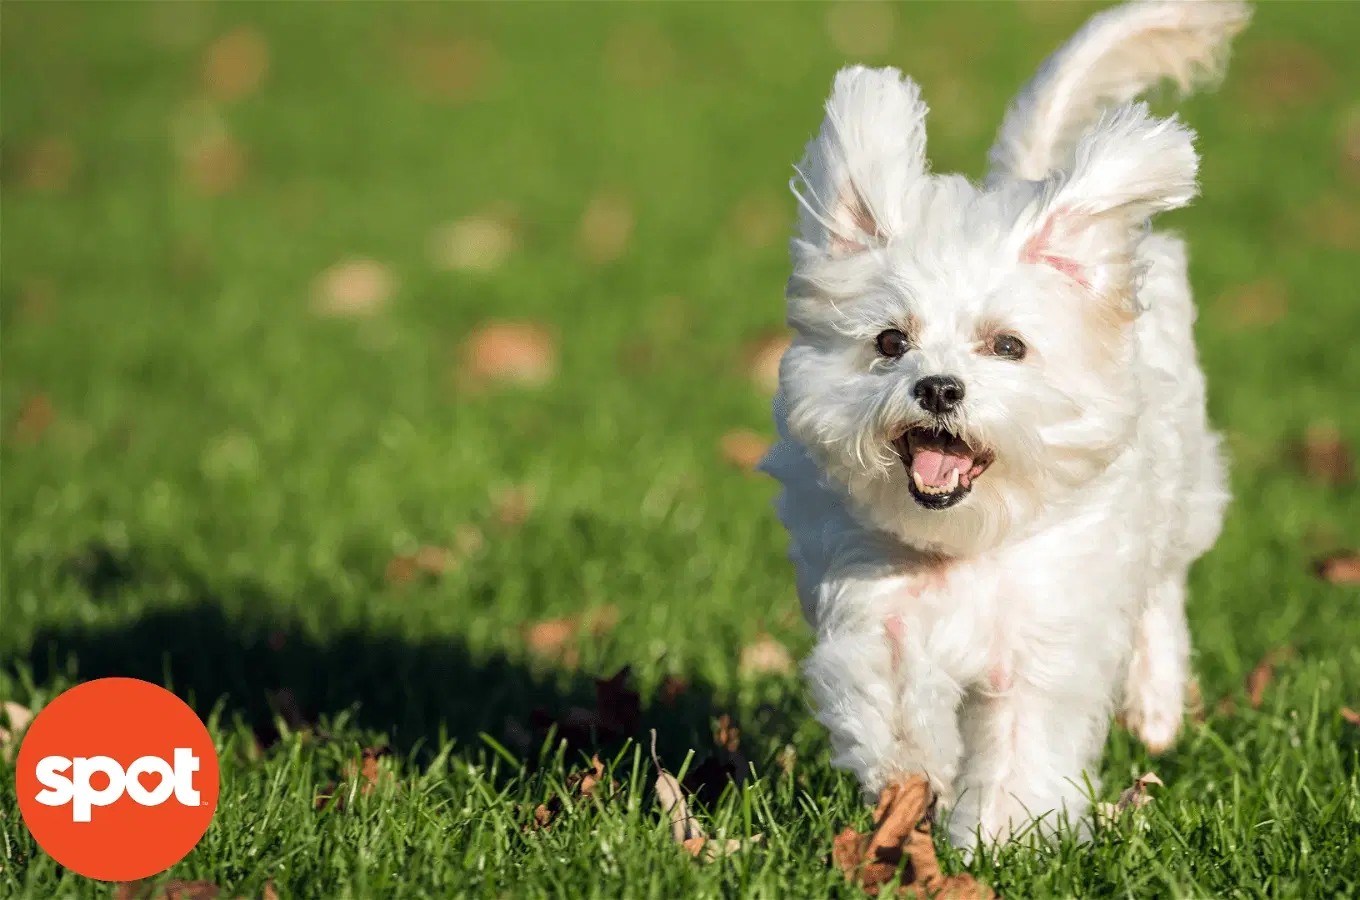 A small fluffy white dog runs on a grassy field.